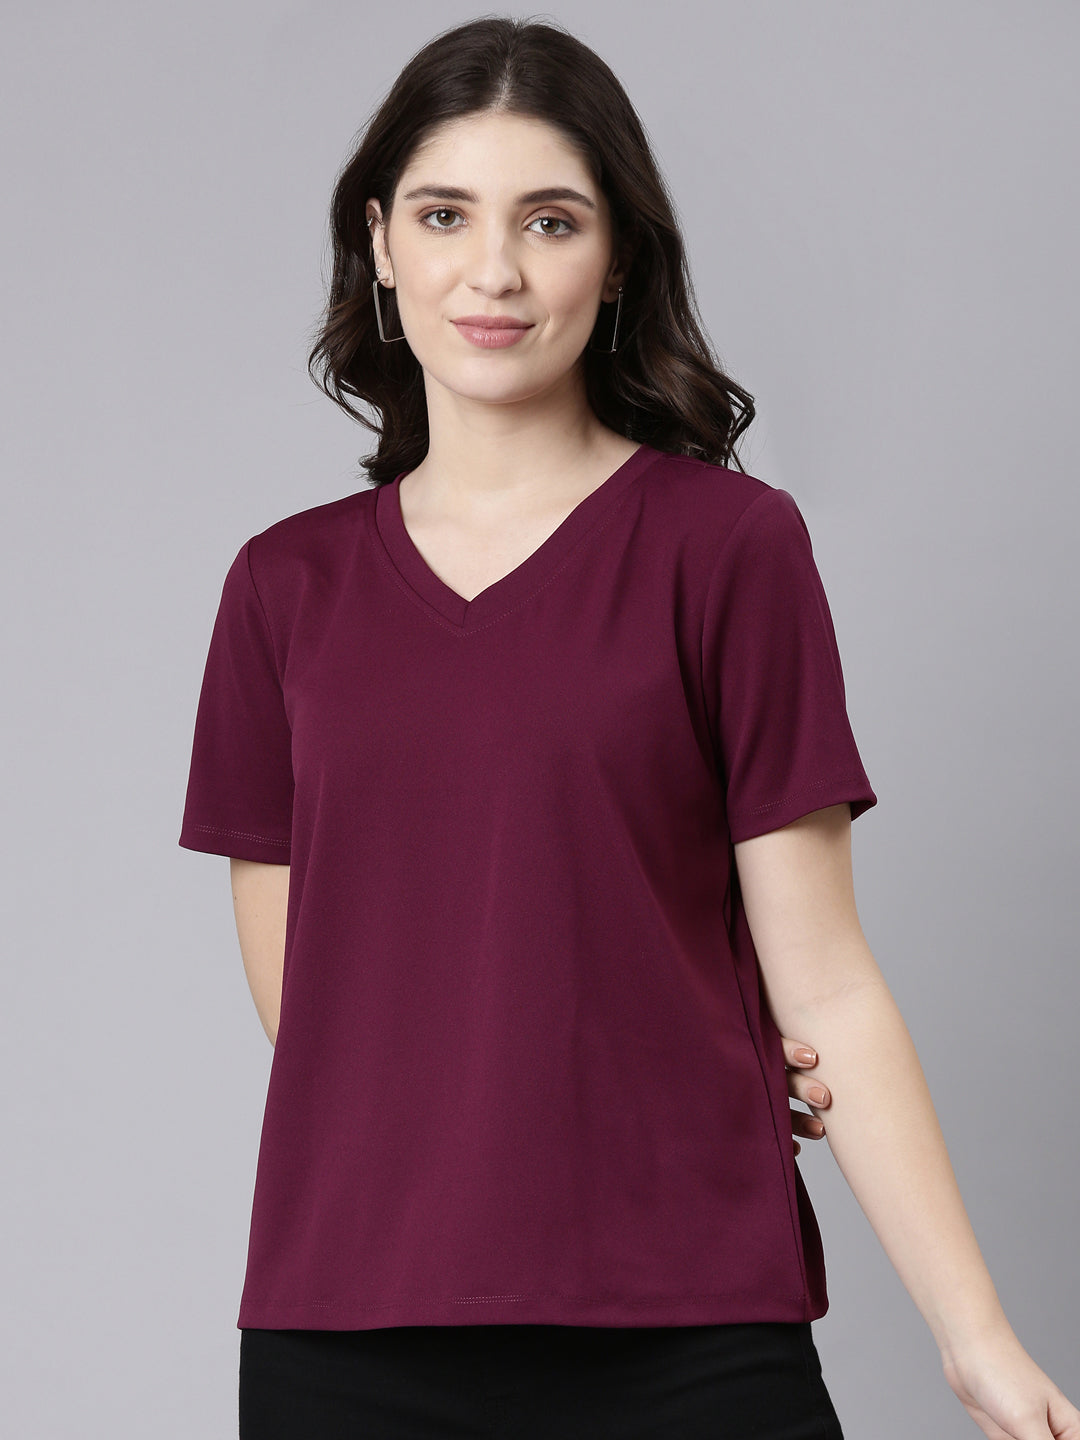 stylish Teen Girls Tops Long Sleeve t shirts Spring Cotton T-shirt